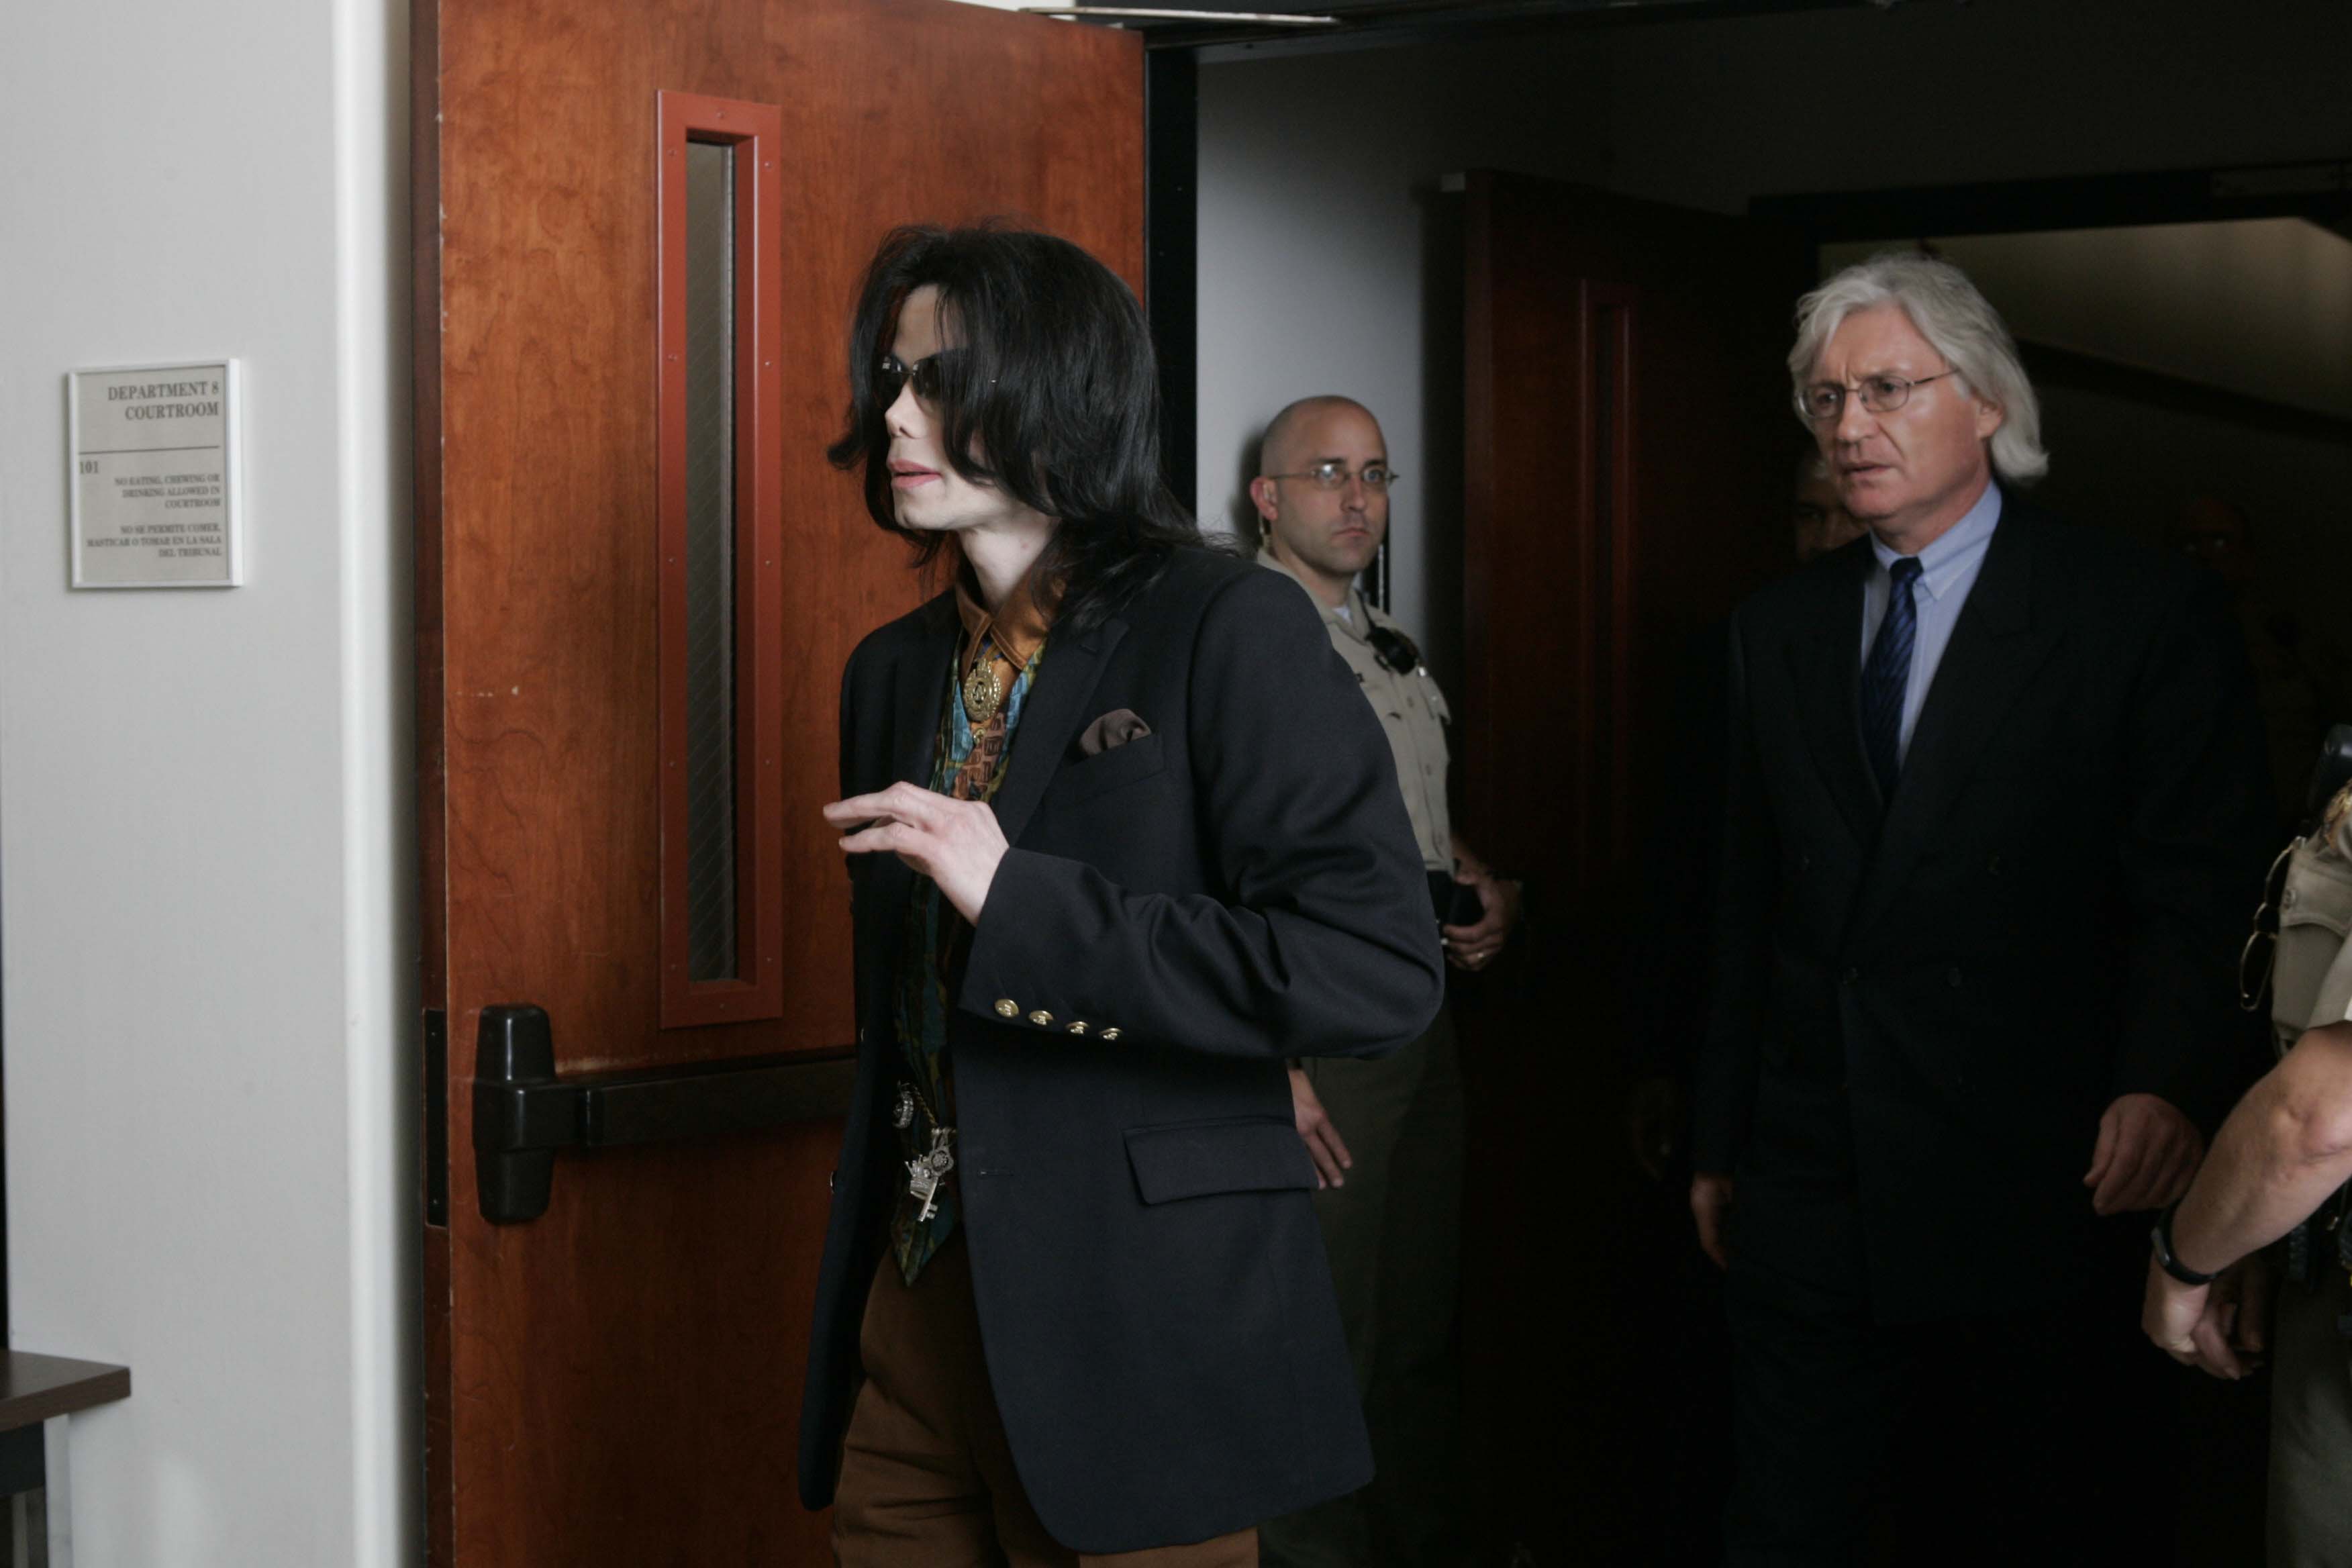 Michael Jackson and lead defense attorney Thomas Mesereau leave a Santa Barbara County courtroom